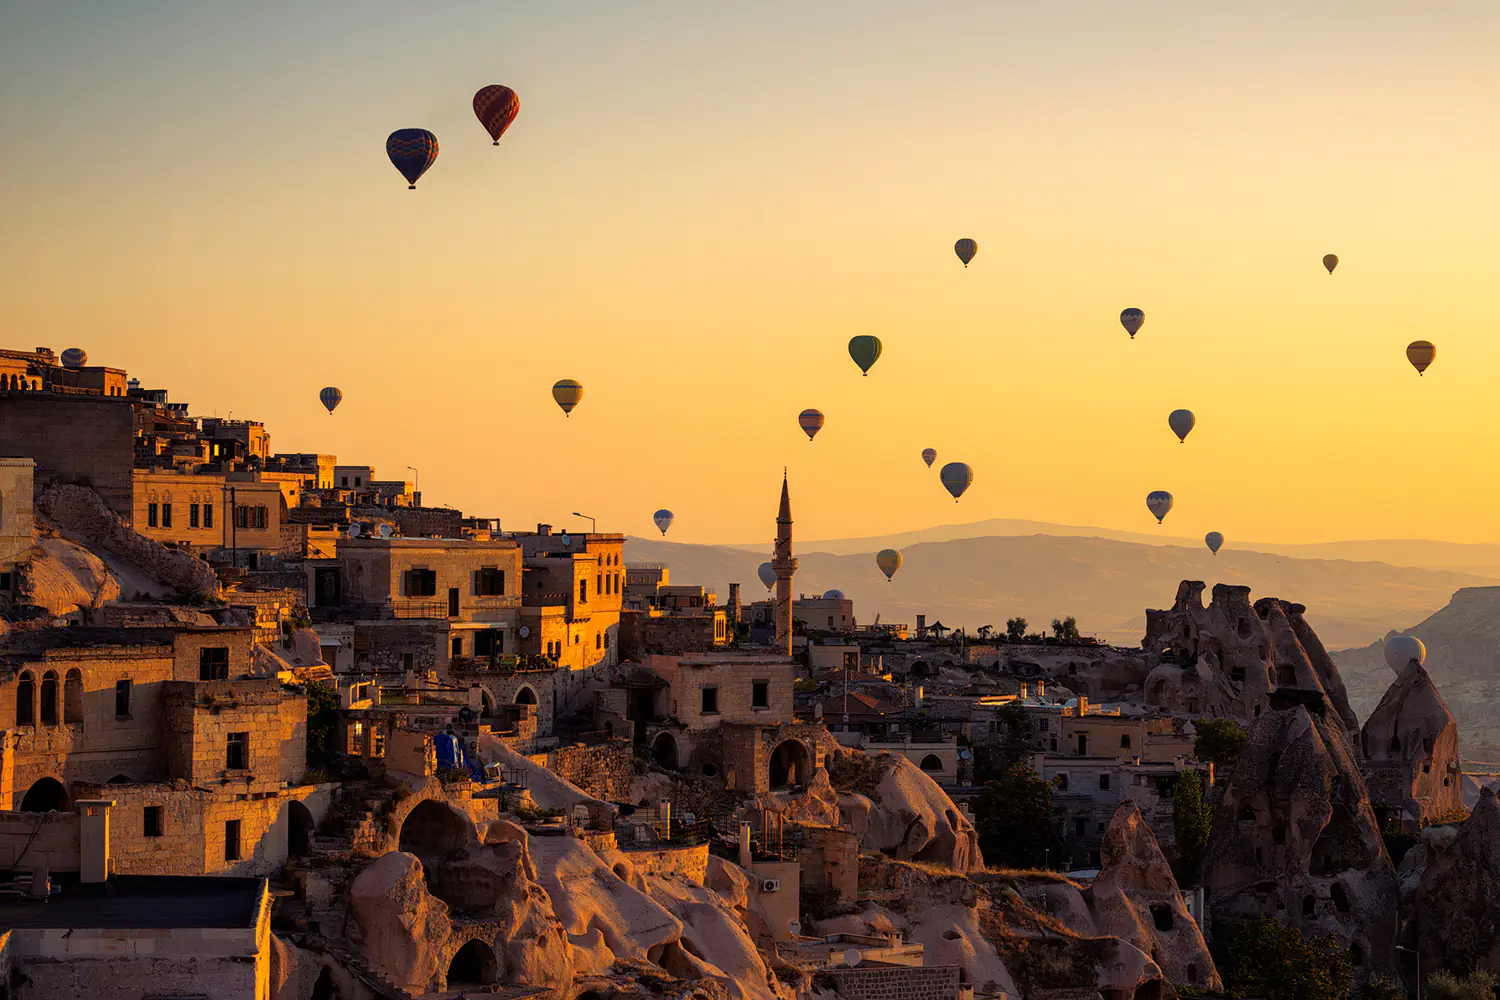 ITAP of a hot air balloon ride in Cappadocia : r/itookapicture